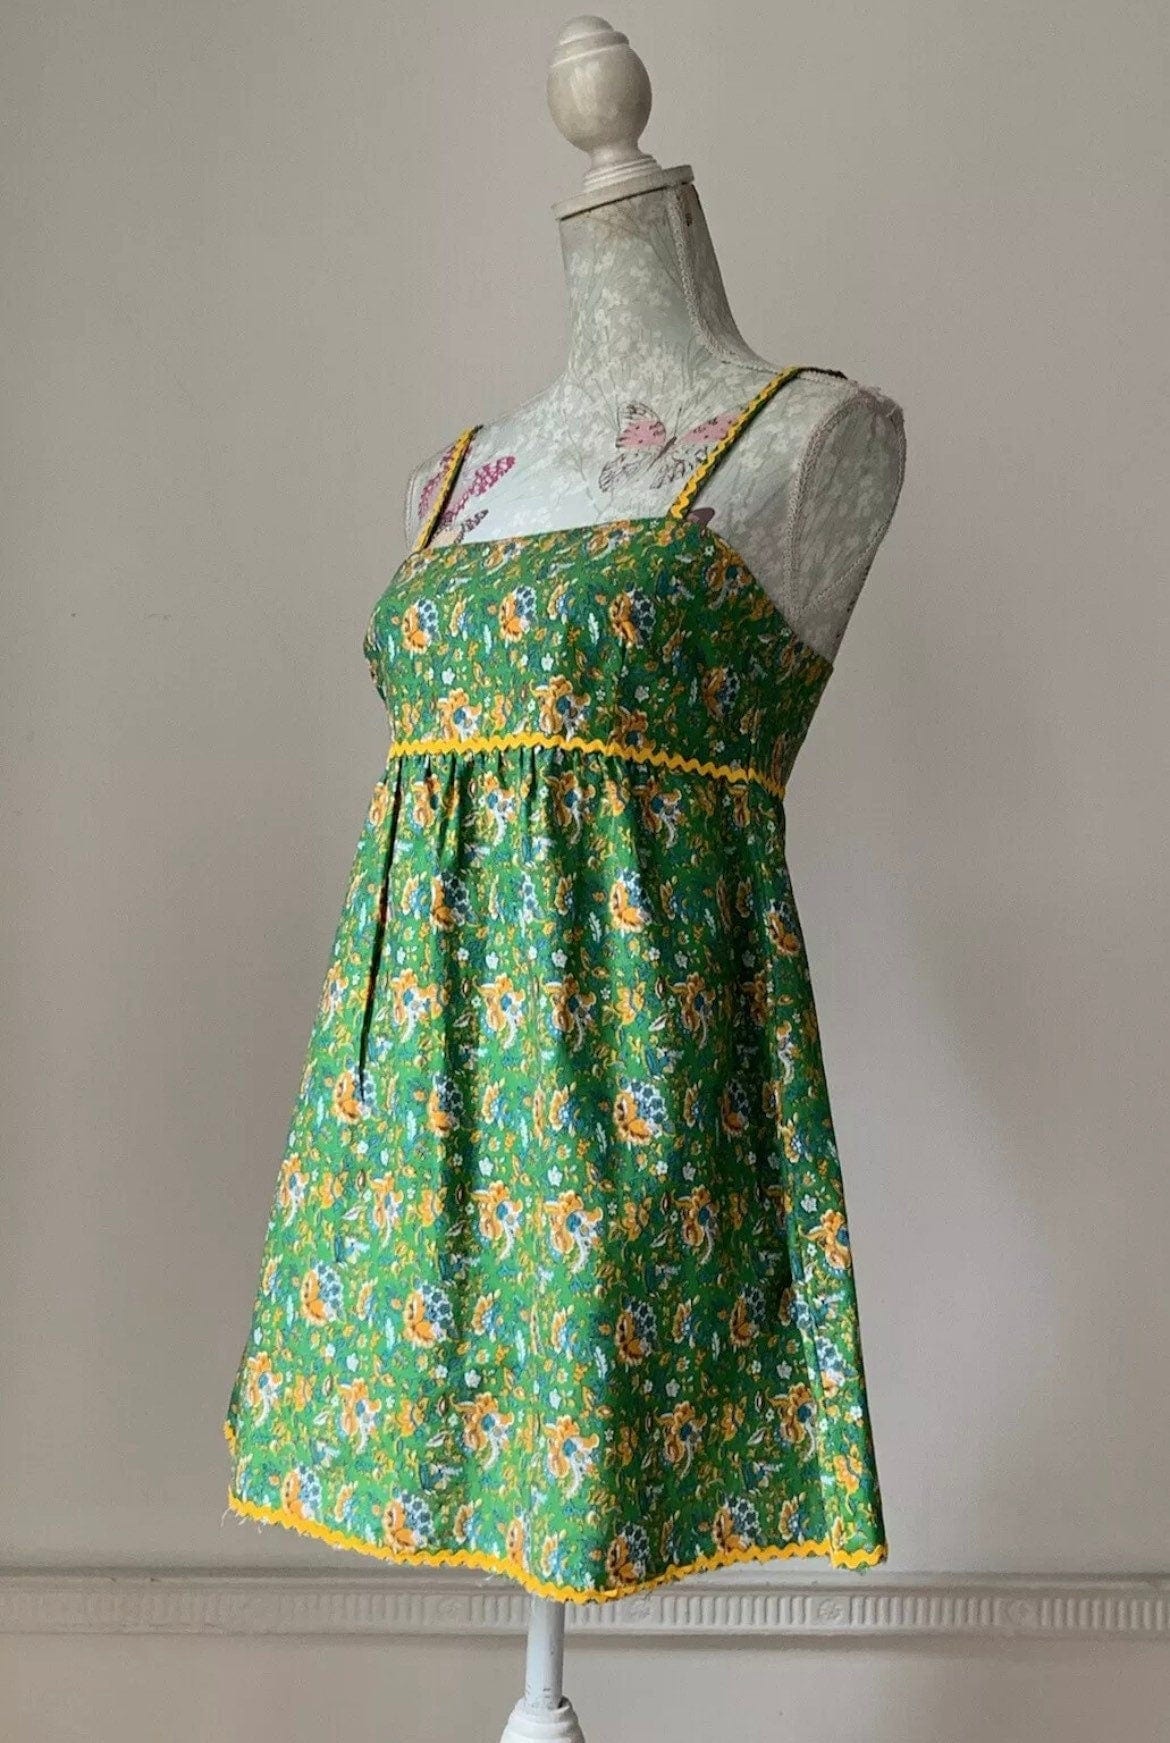 Vintage 1970s Handmade Green Floral Cotton Smock Top Size 8